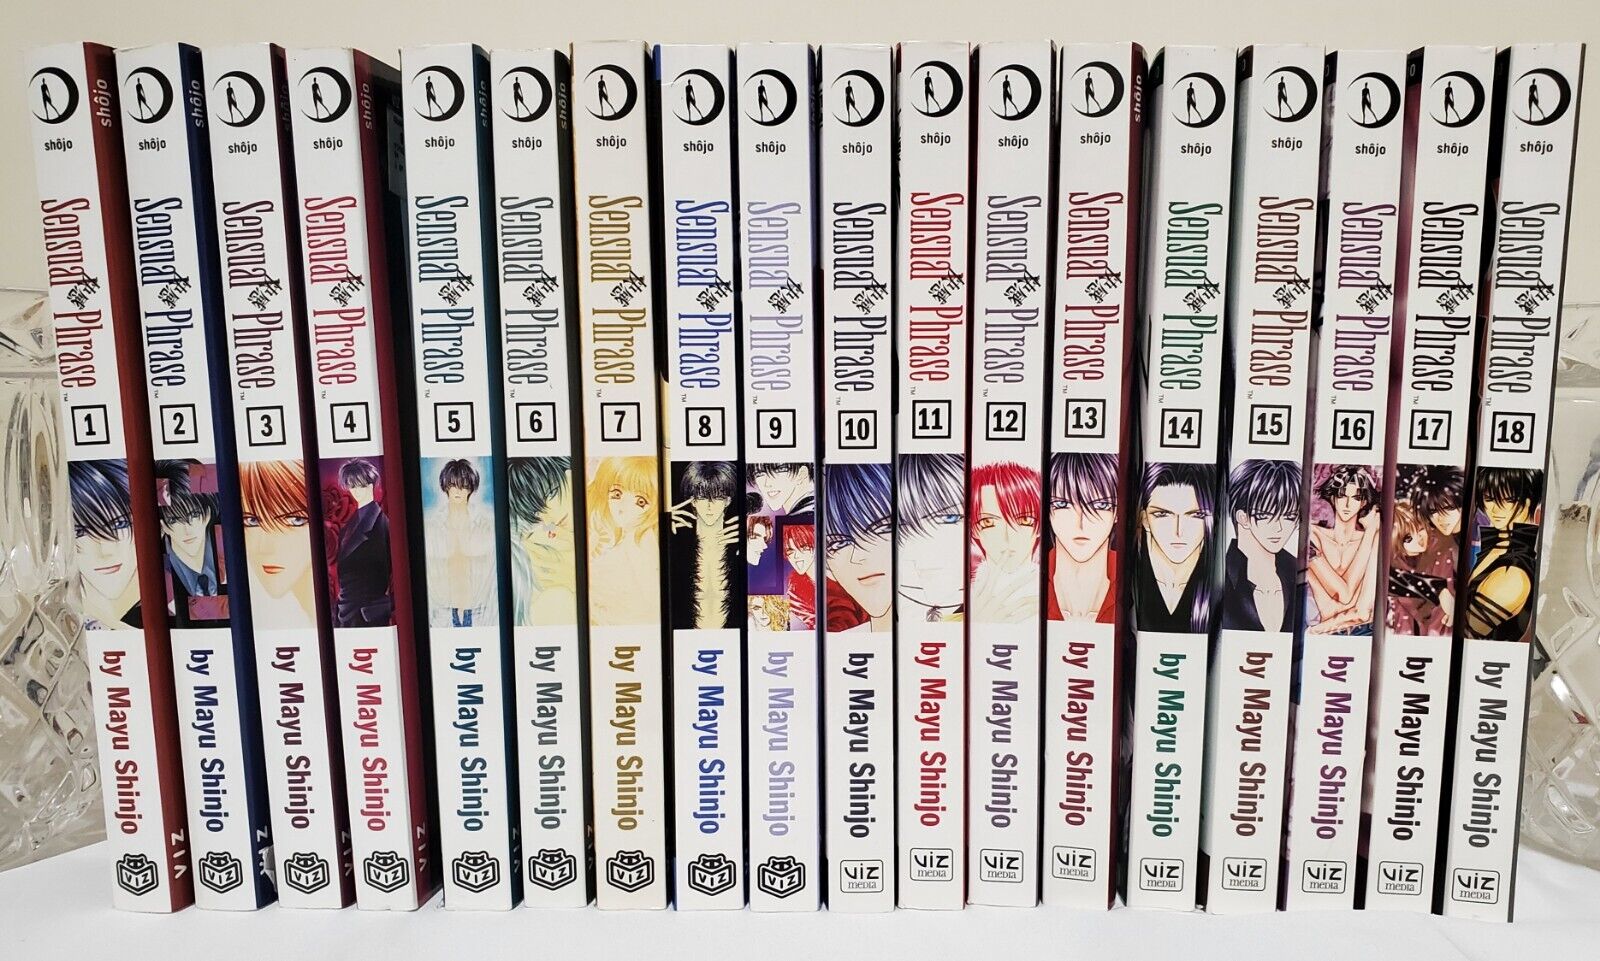 Sensual Phrase Manga by Mayu Shinjo Volumes 1-18 Complete English Rare OOP